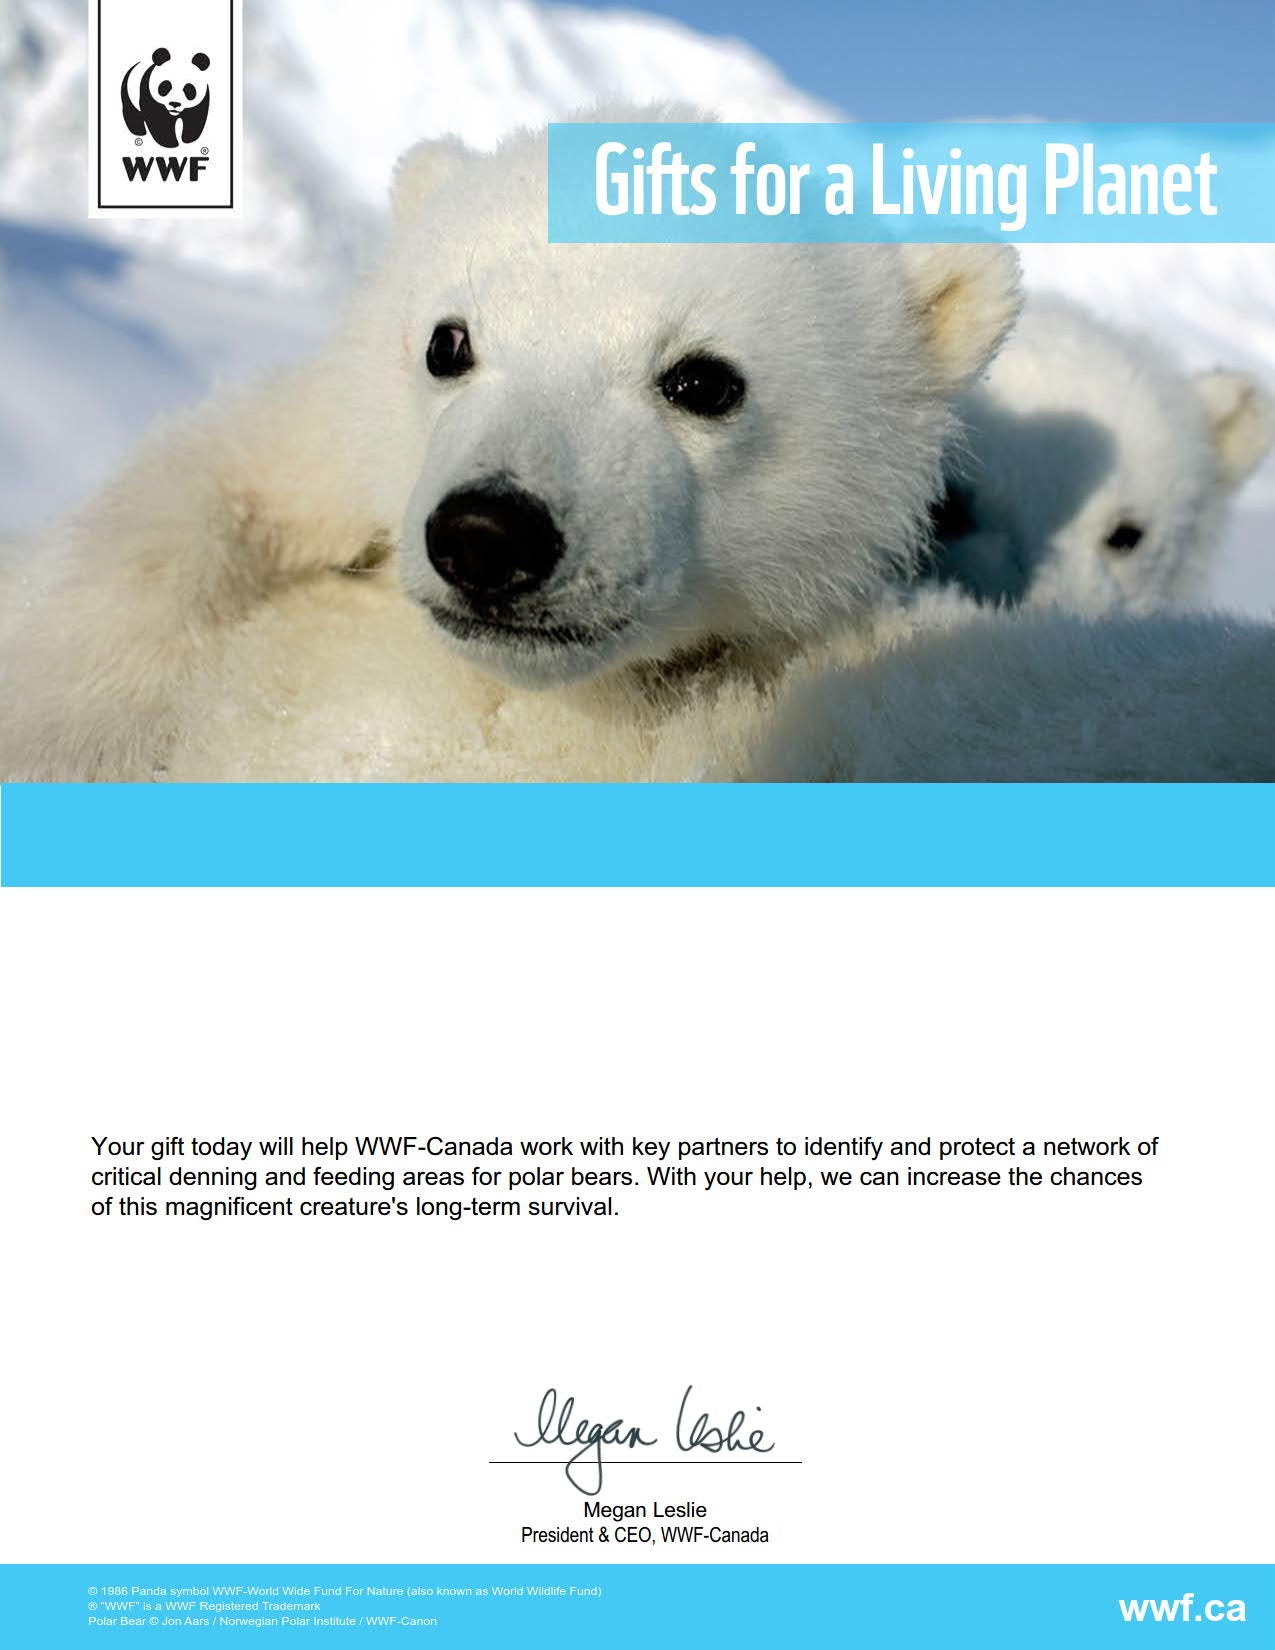 protect polar bear dens - WWF-Canada